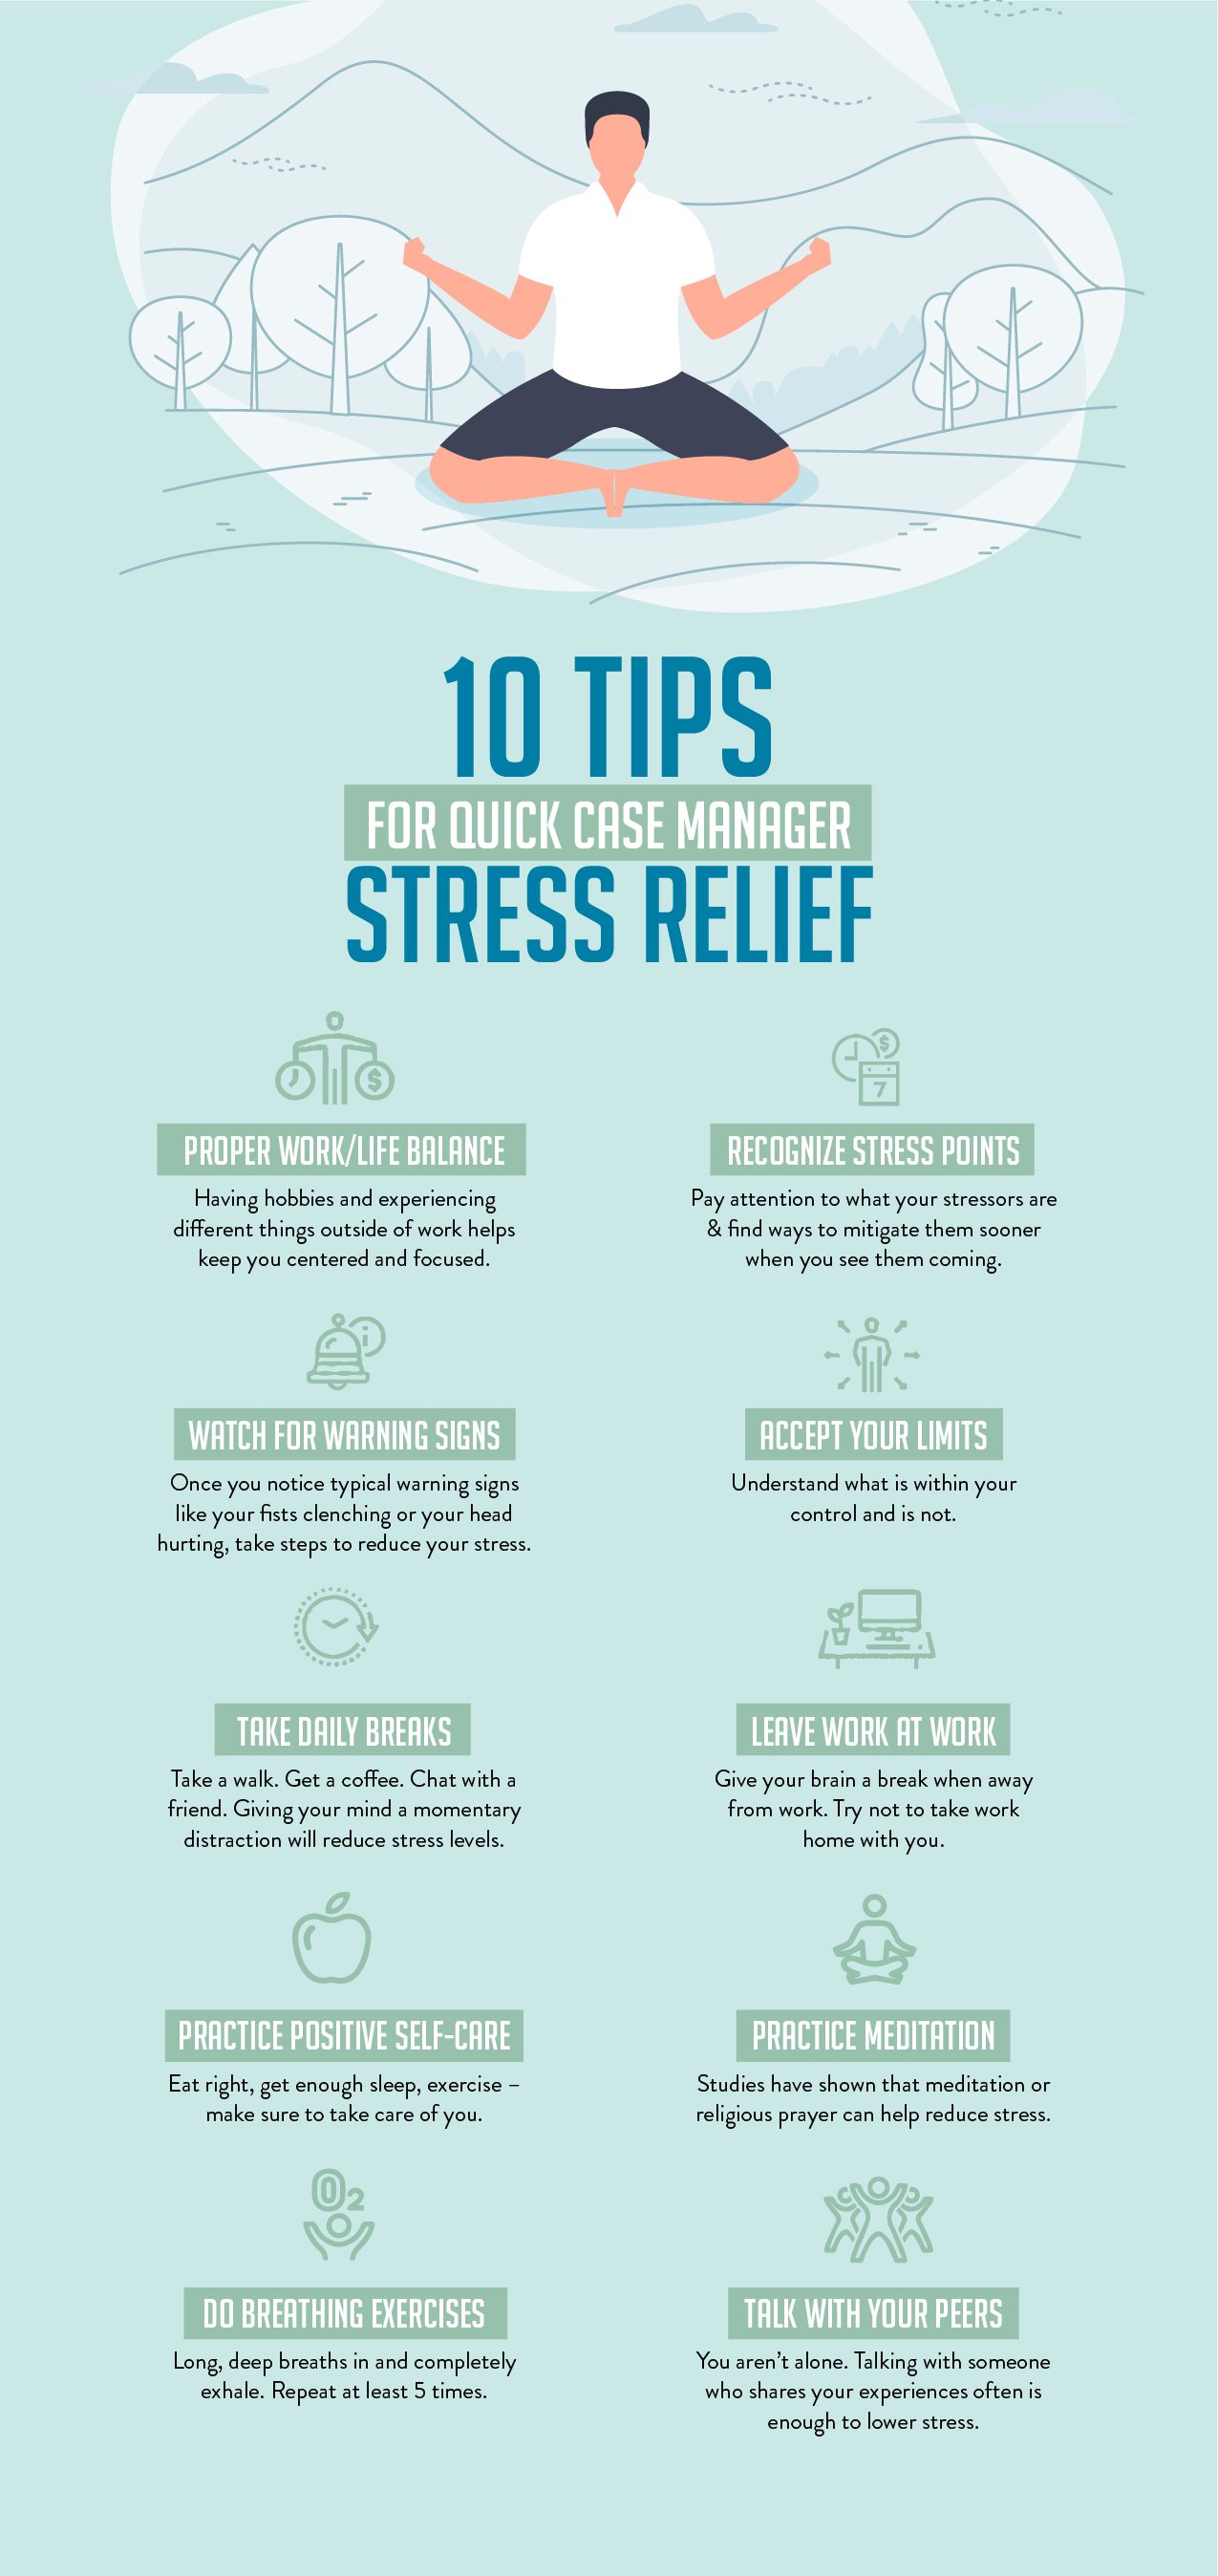 Quick Stress Relief 